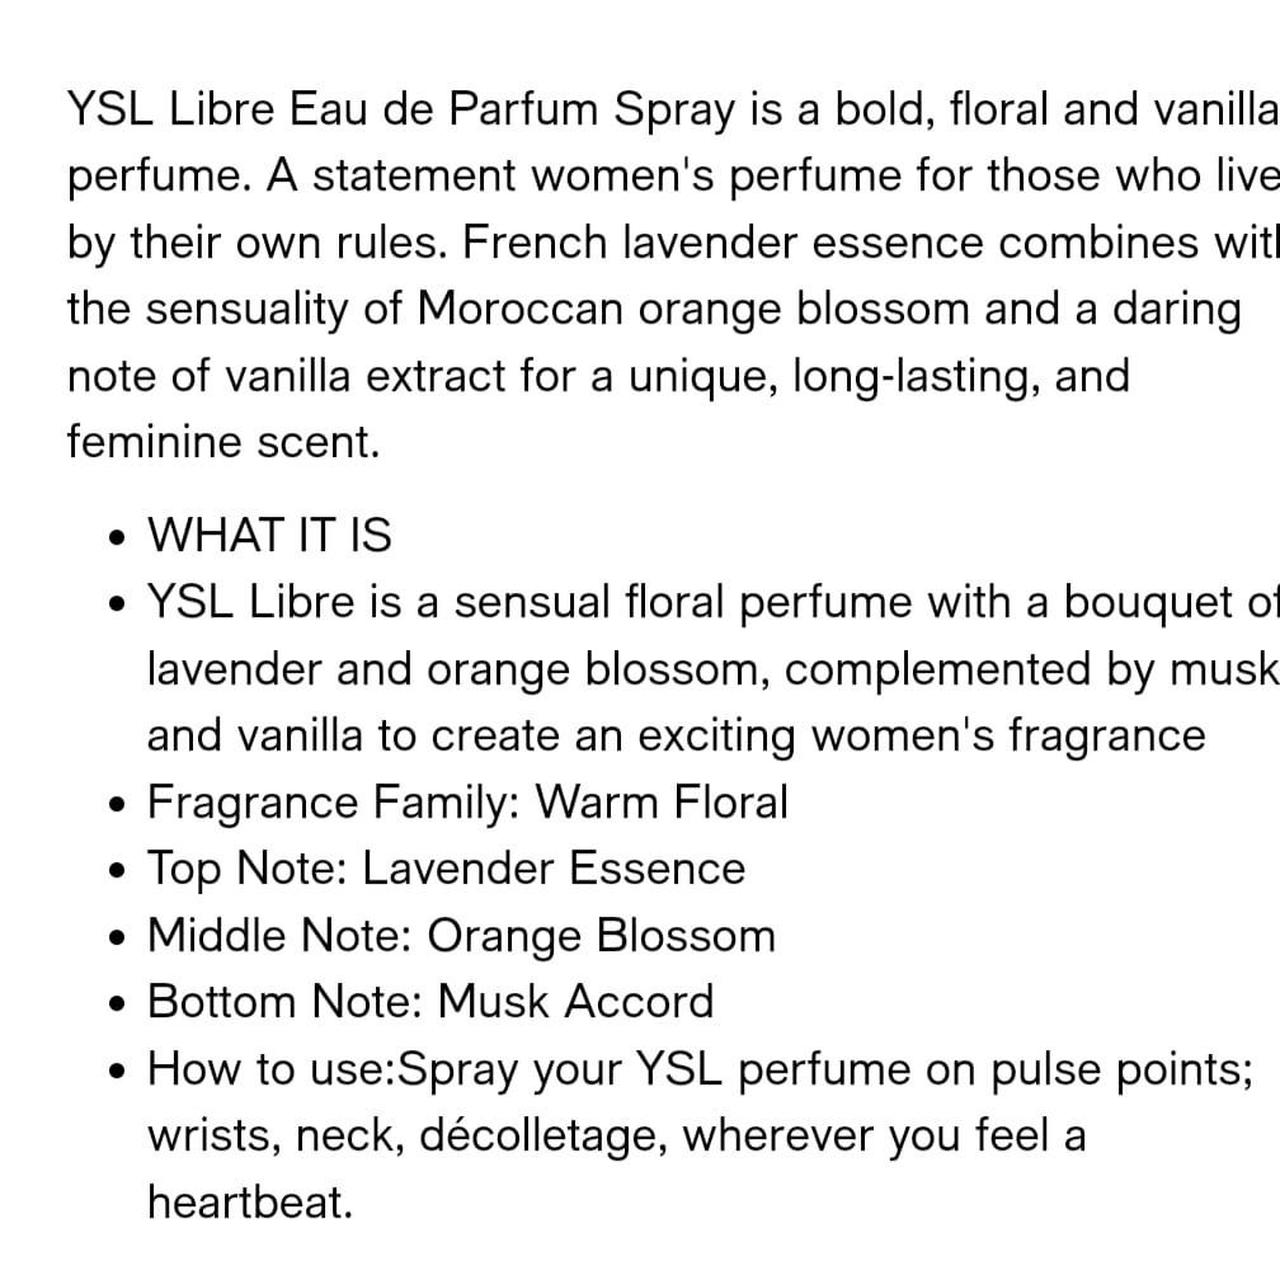 Yves Saint Laurent Ysl Libre Mini Women Splash Perfume 7.5 ml